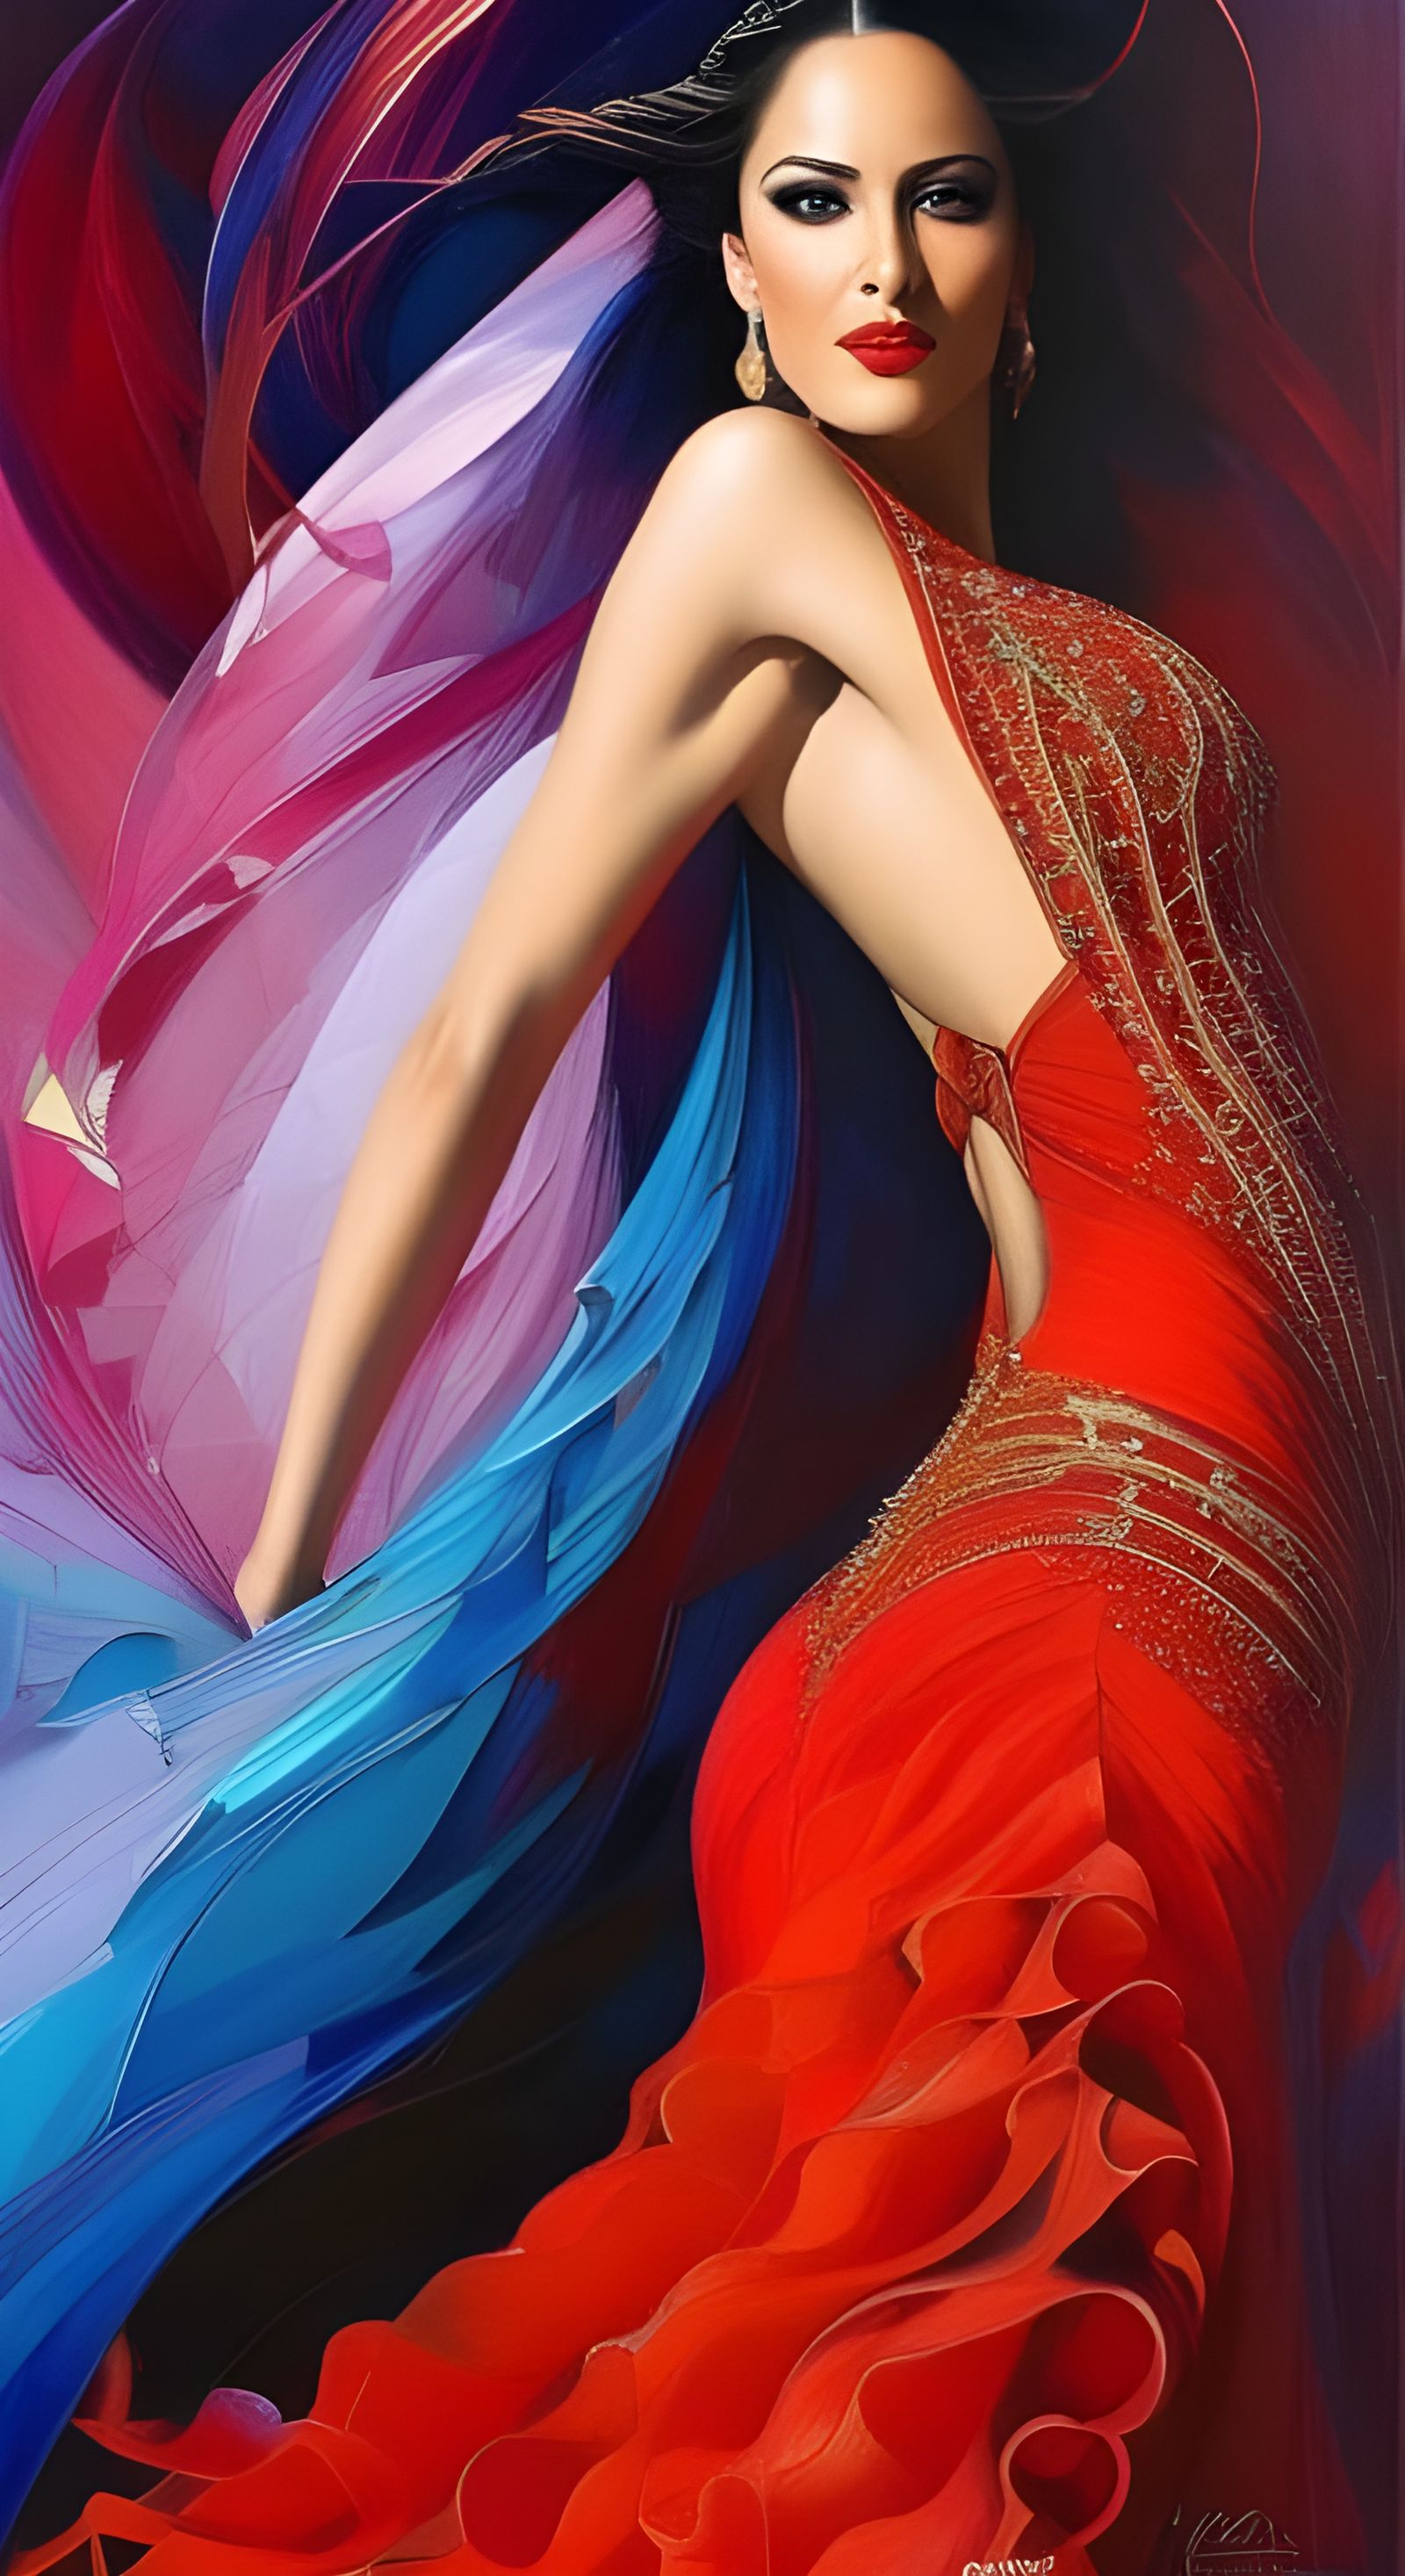 A vibrant flamenco dancer